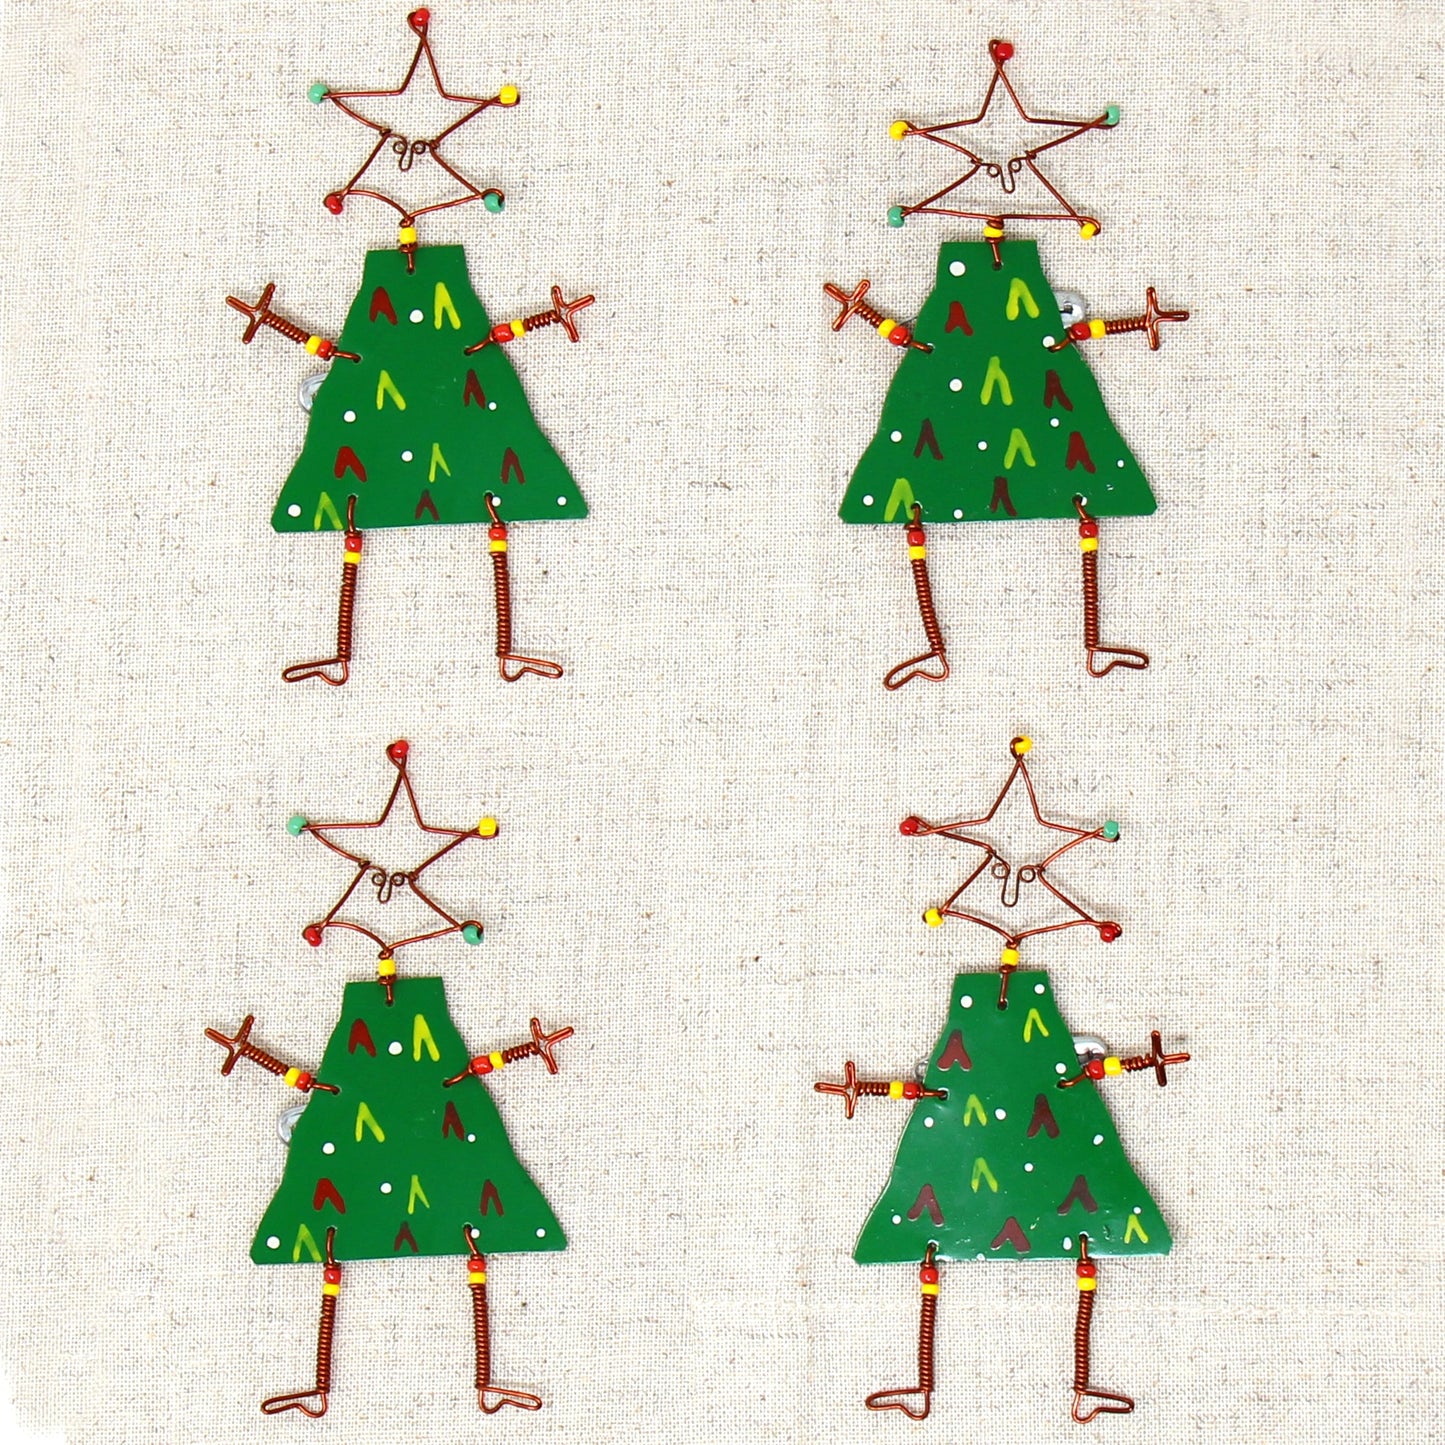 dancing-girl-christmas-tree-pin-creative-alternatives